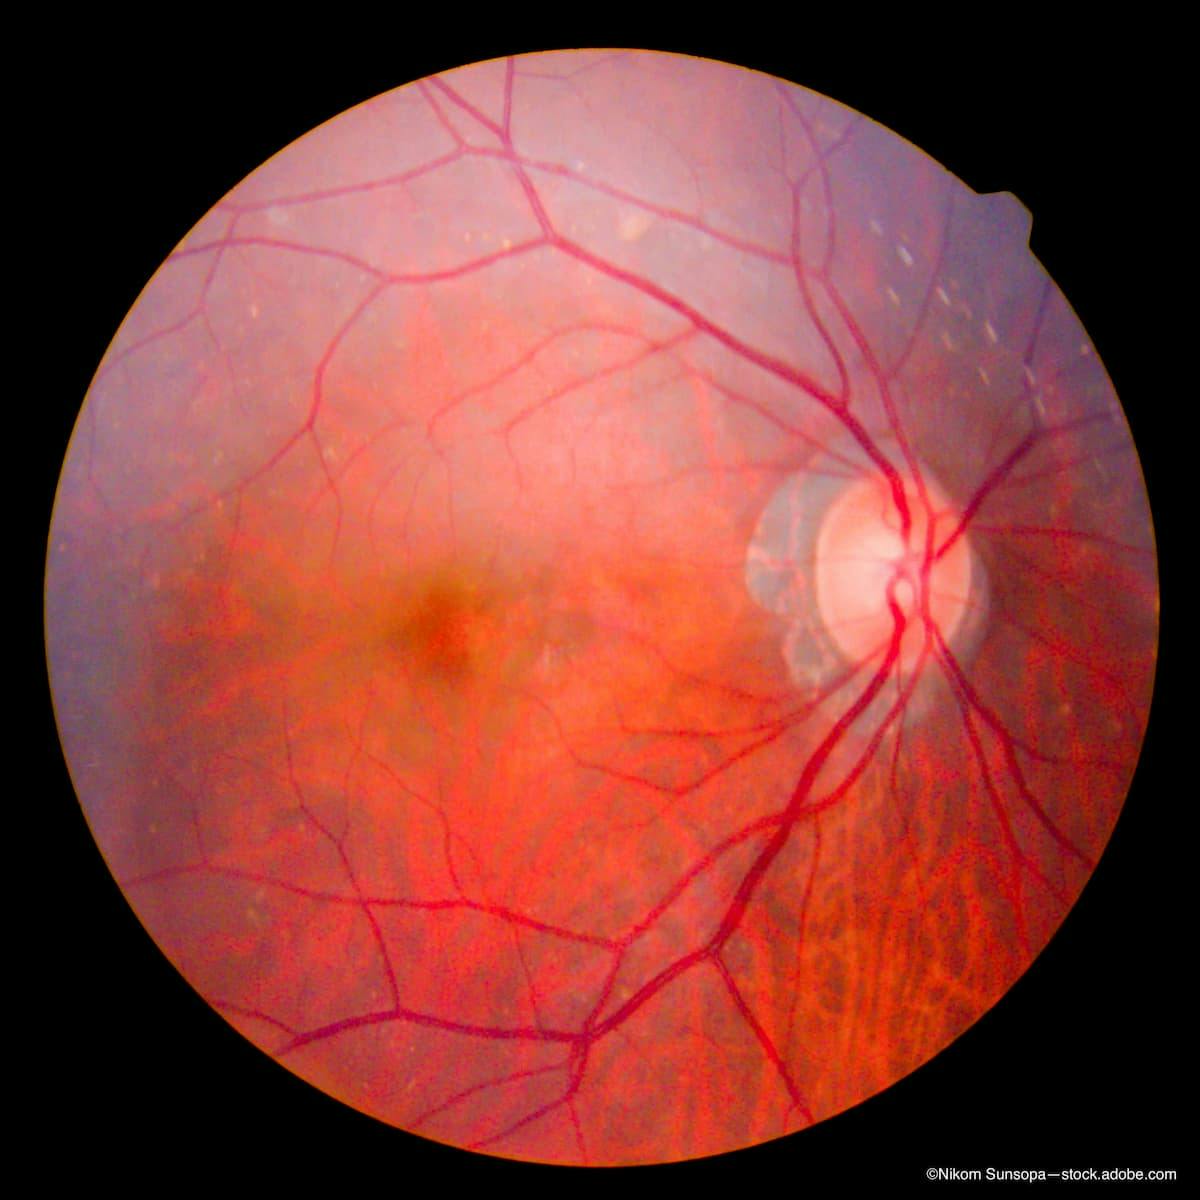 Unraveling burdens of X-linked retinitis pigmentosa